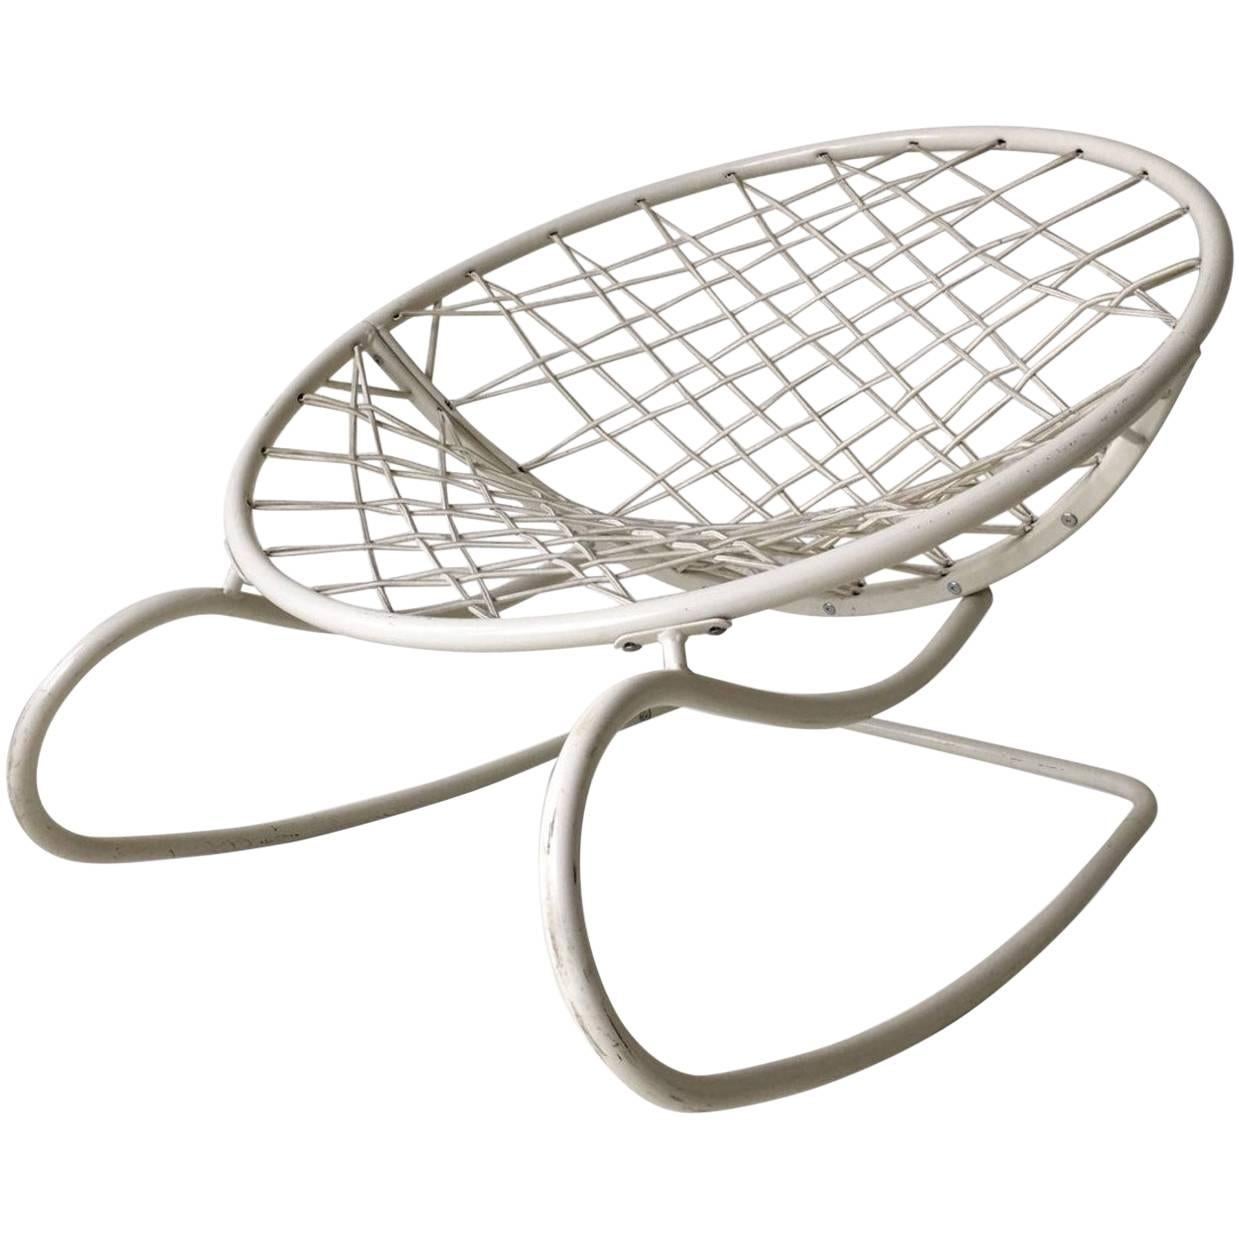 Ikea White Rocking Chair, Lounge Chair, Model Axvall by Niels Gammelgaard, 2002